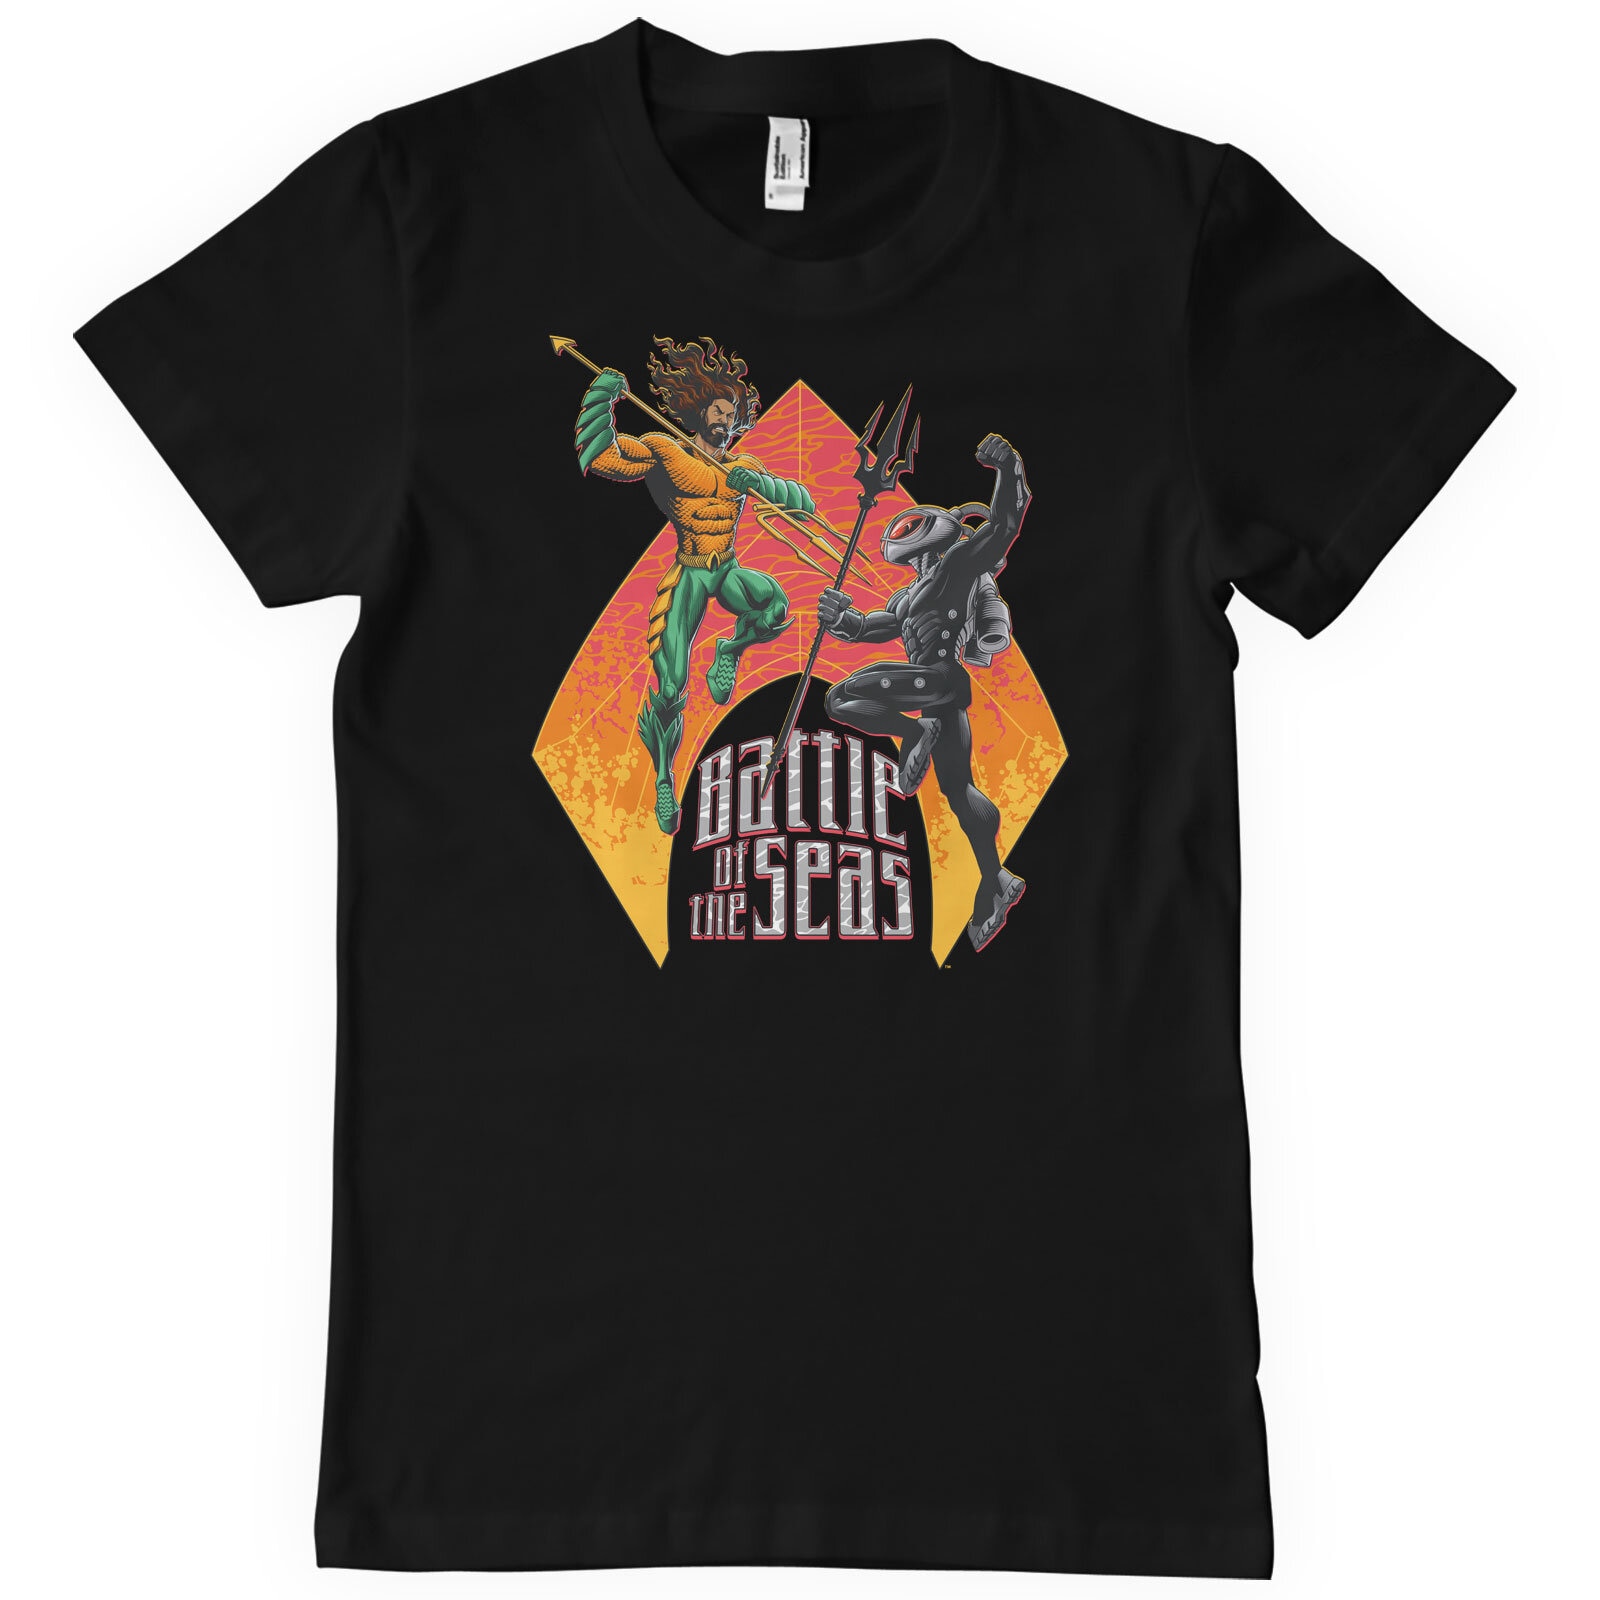 Aquaman - Battle Of The Seas T-Shirt